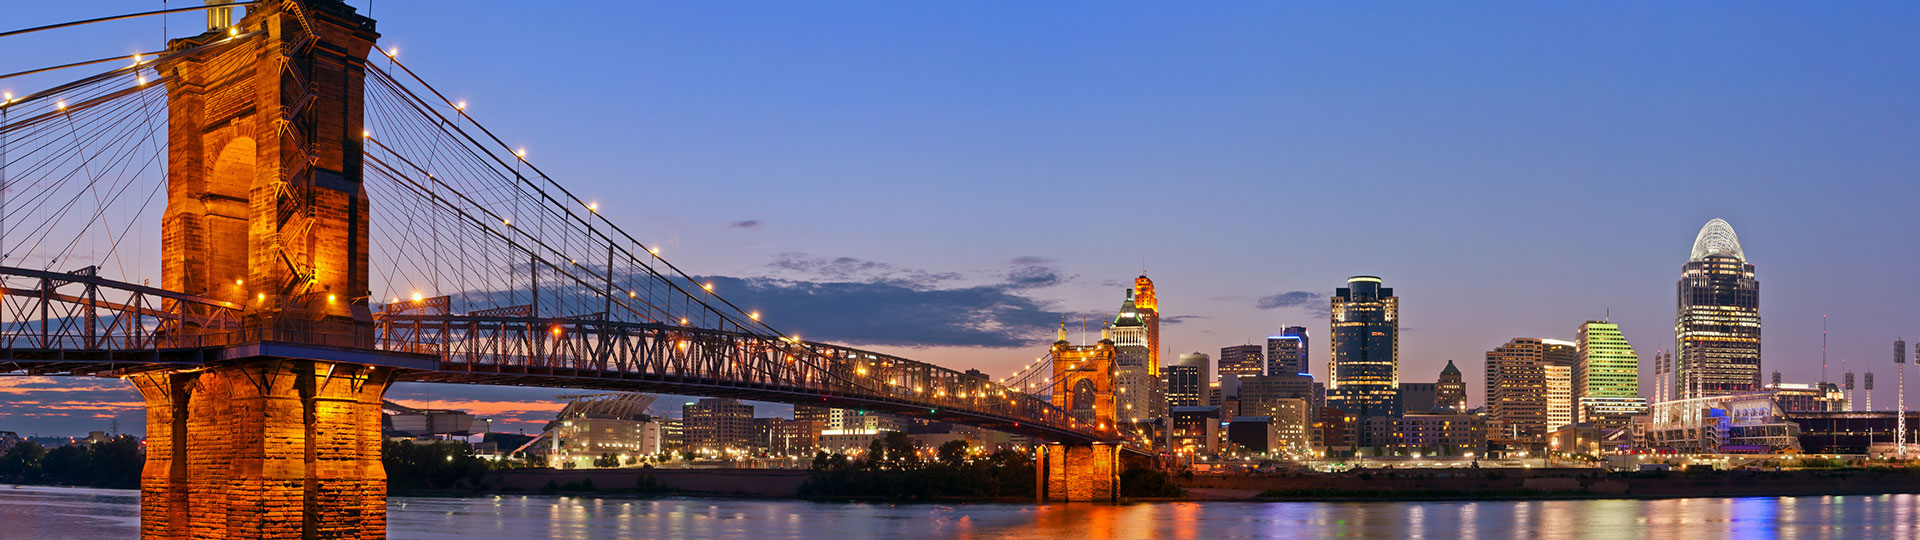 Bridge in Cincinnati